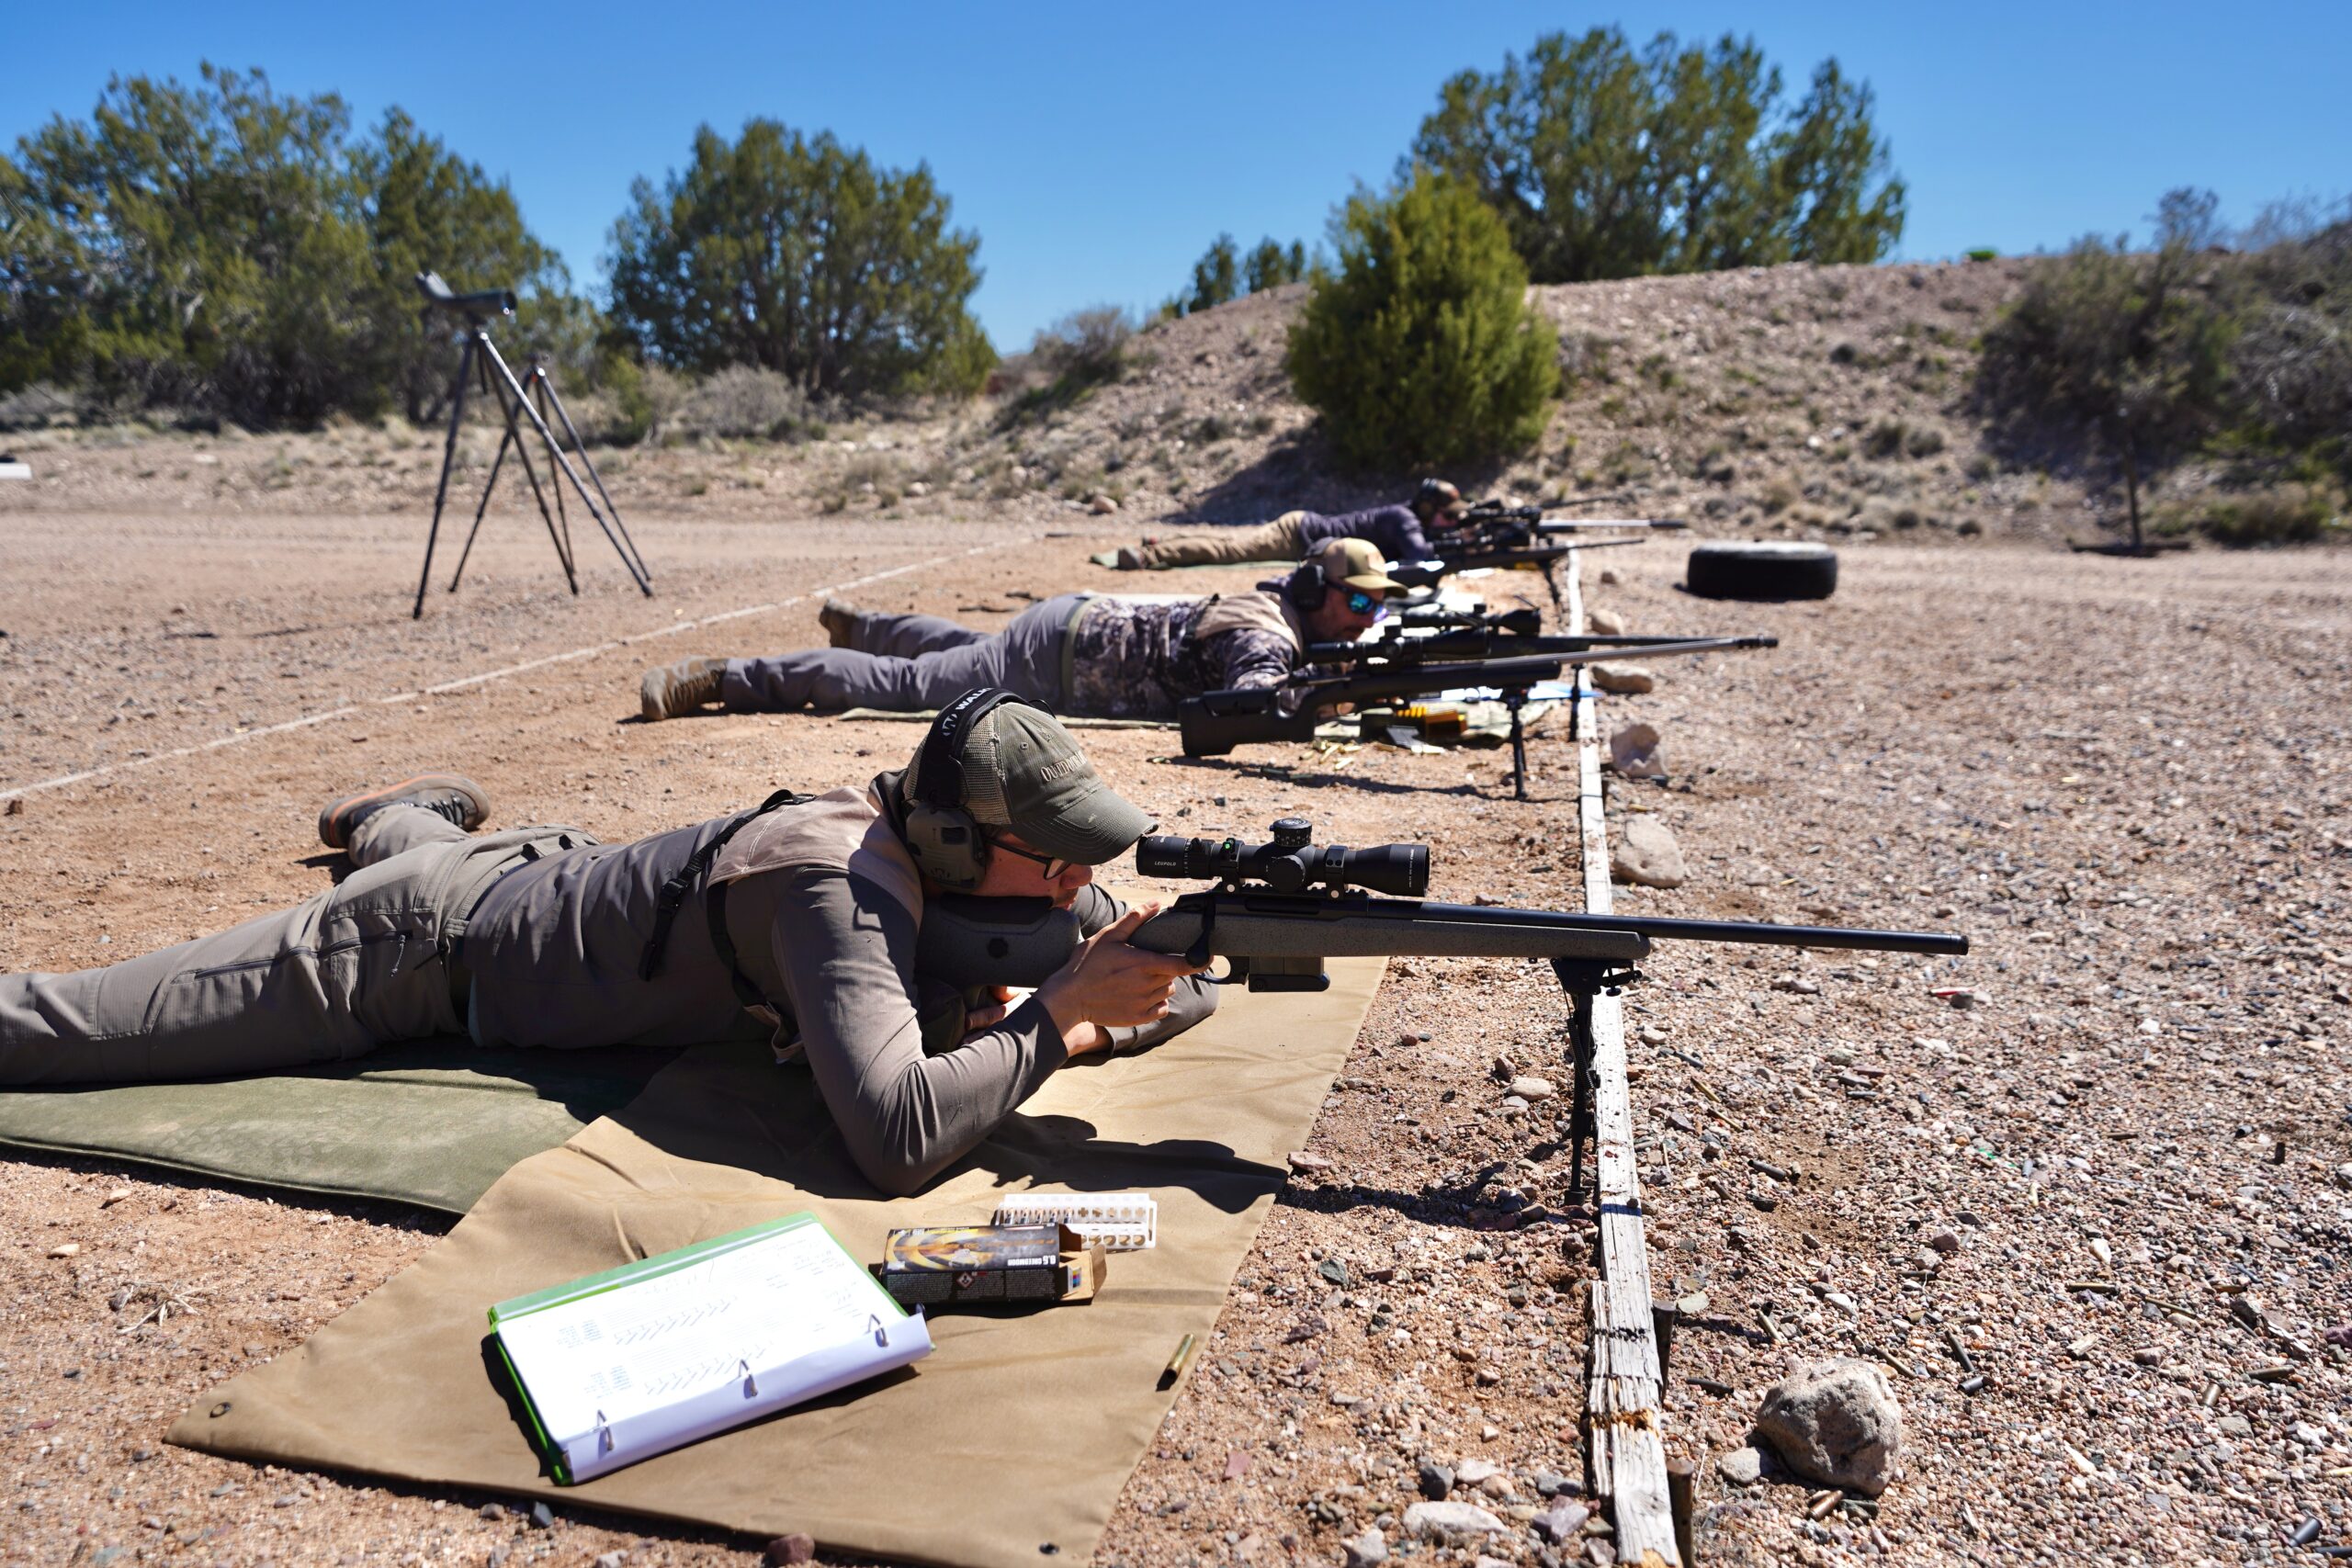 Rifle testing using bipods